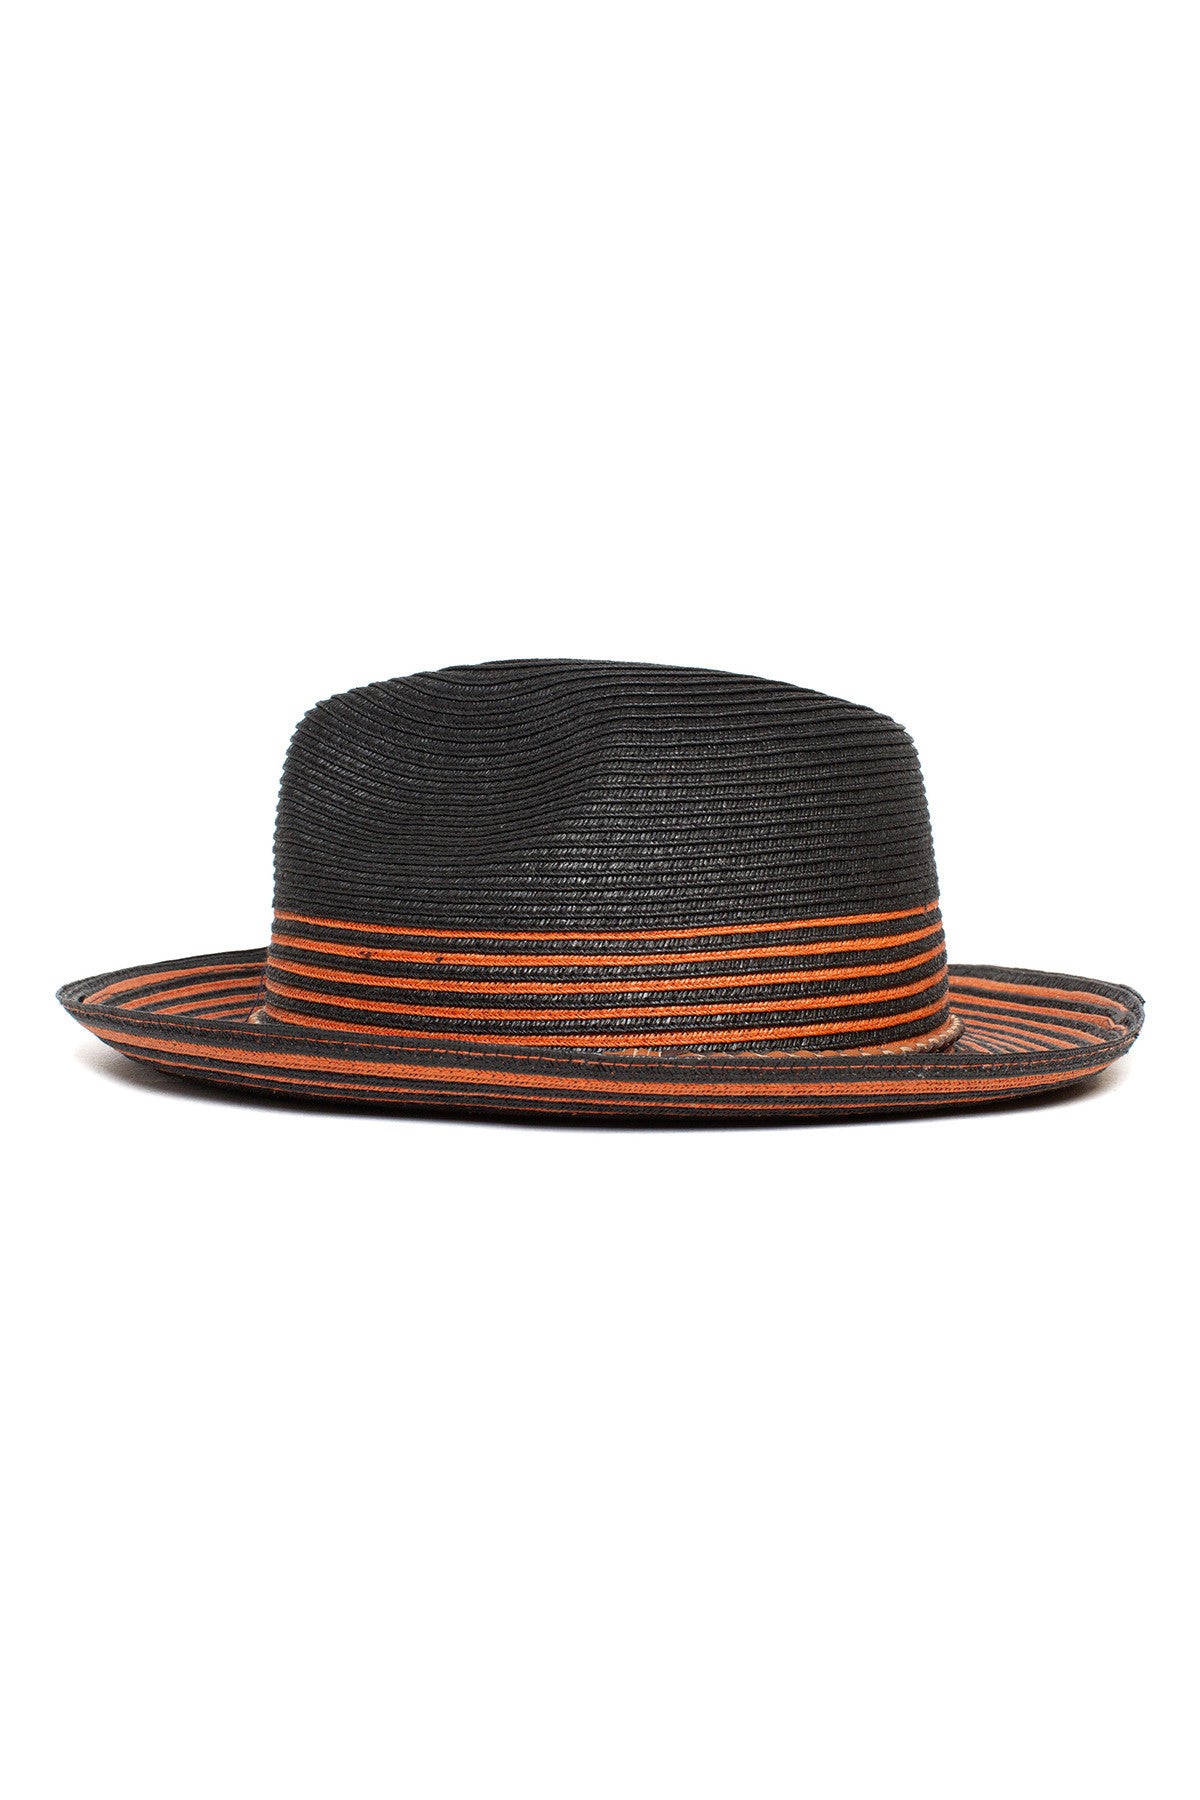 Goorin Bros Sweetie Souse Hat Black